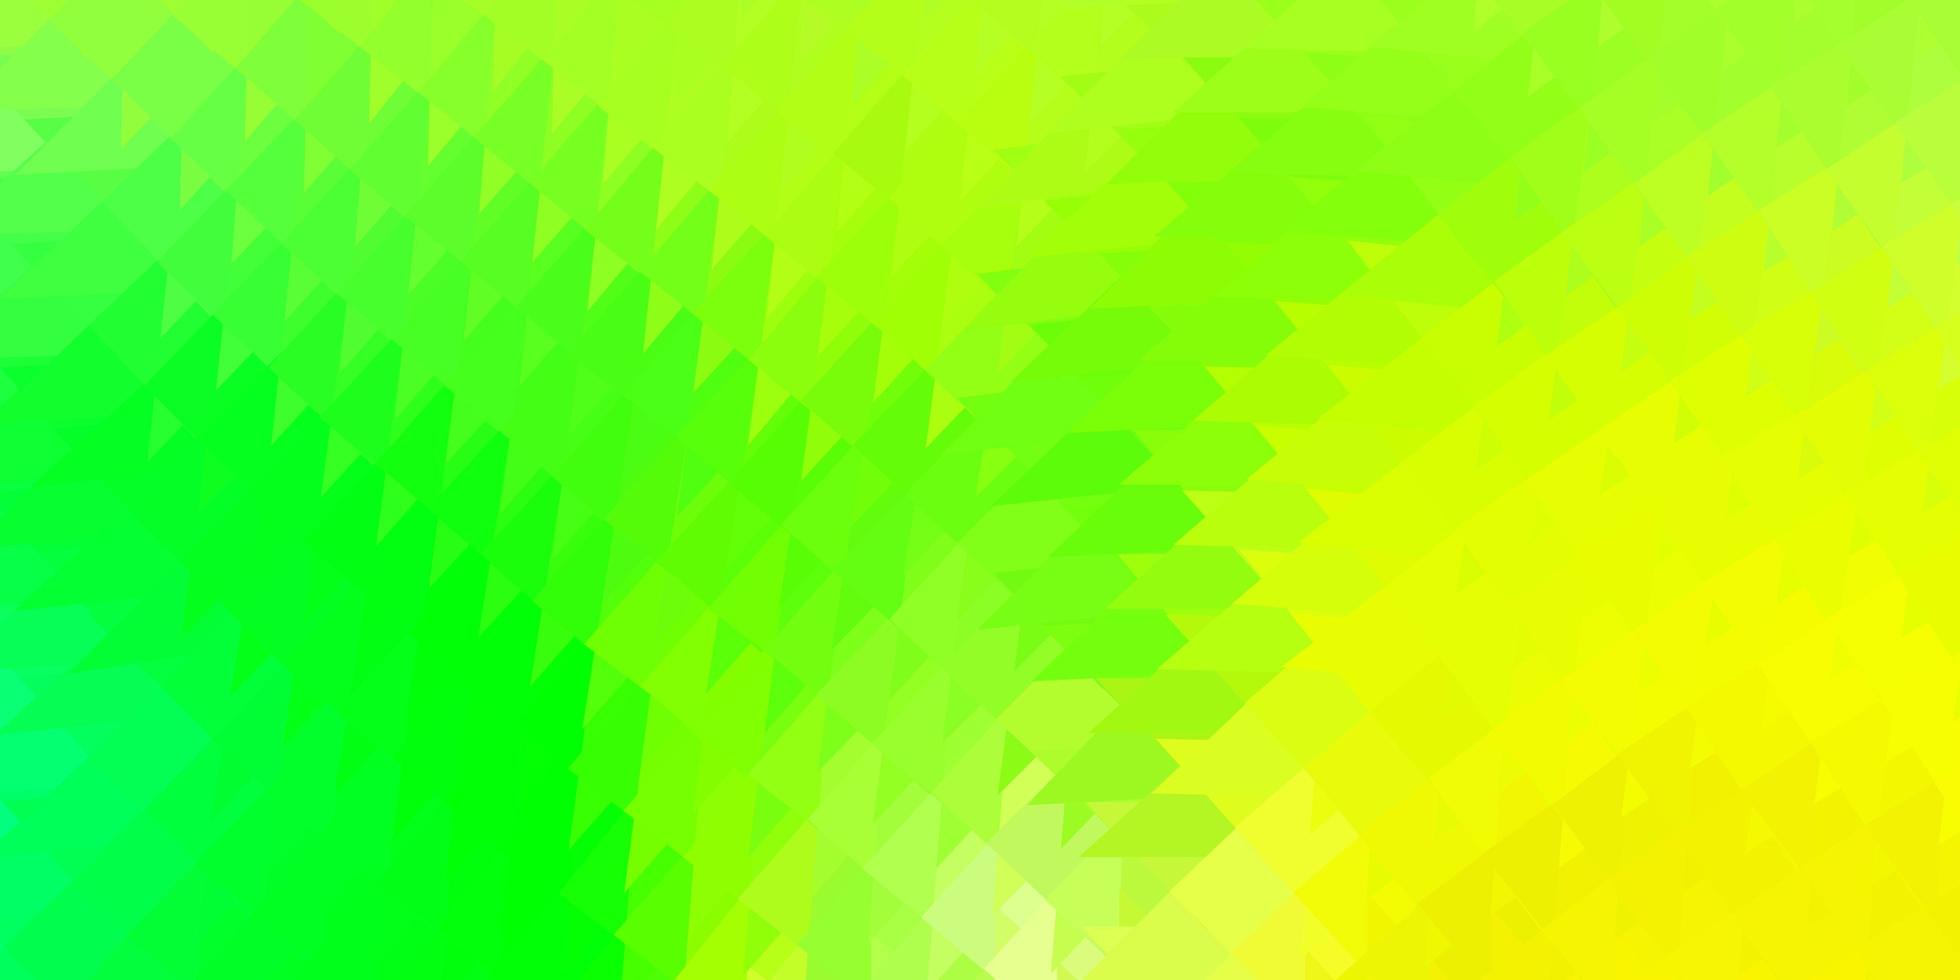 modelo de triângulo poli de vetor verde e amarelo claro.